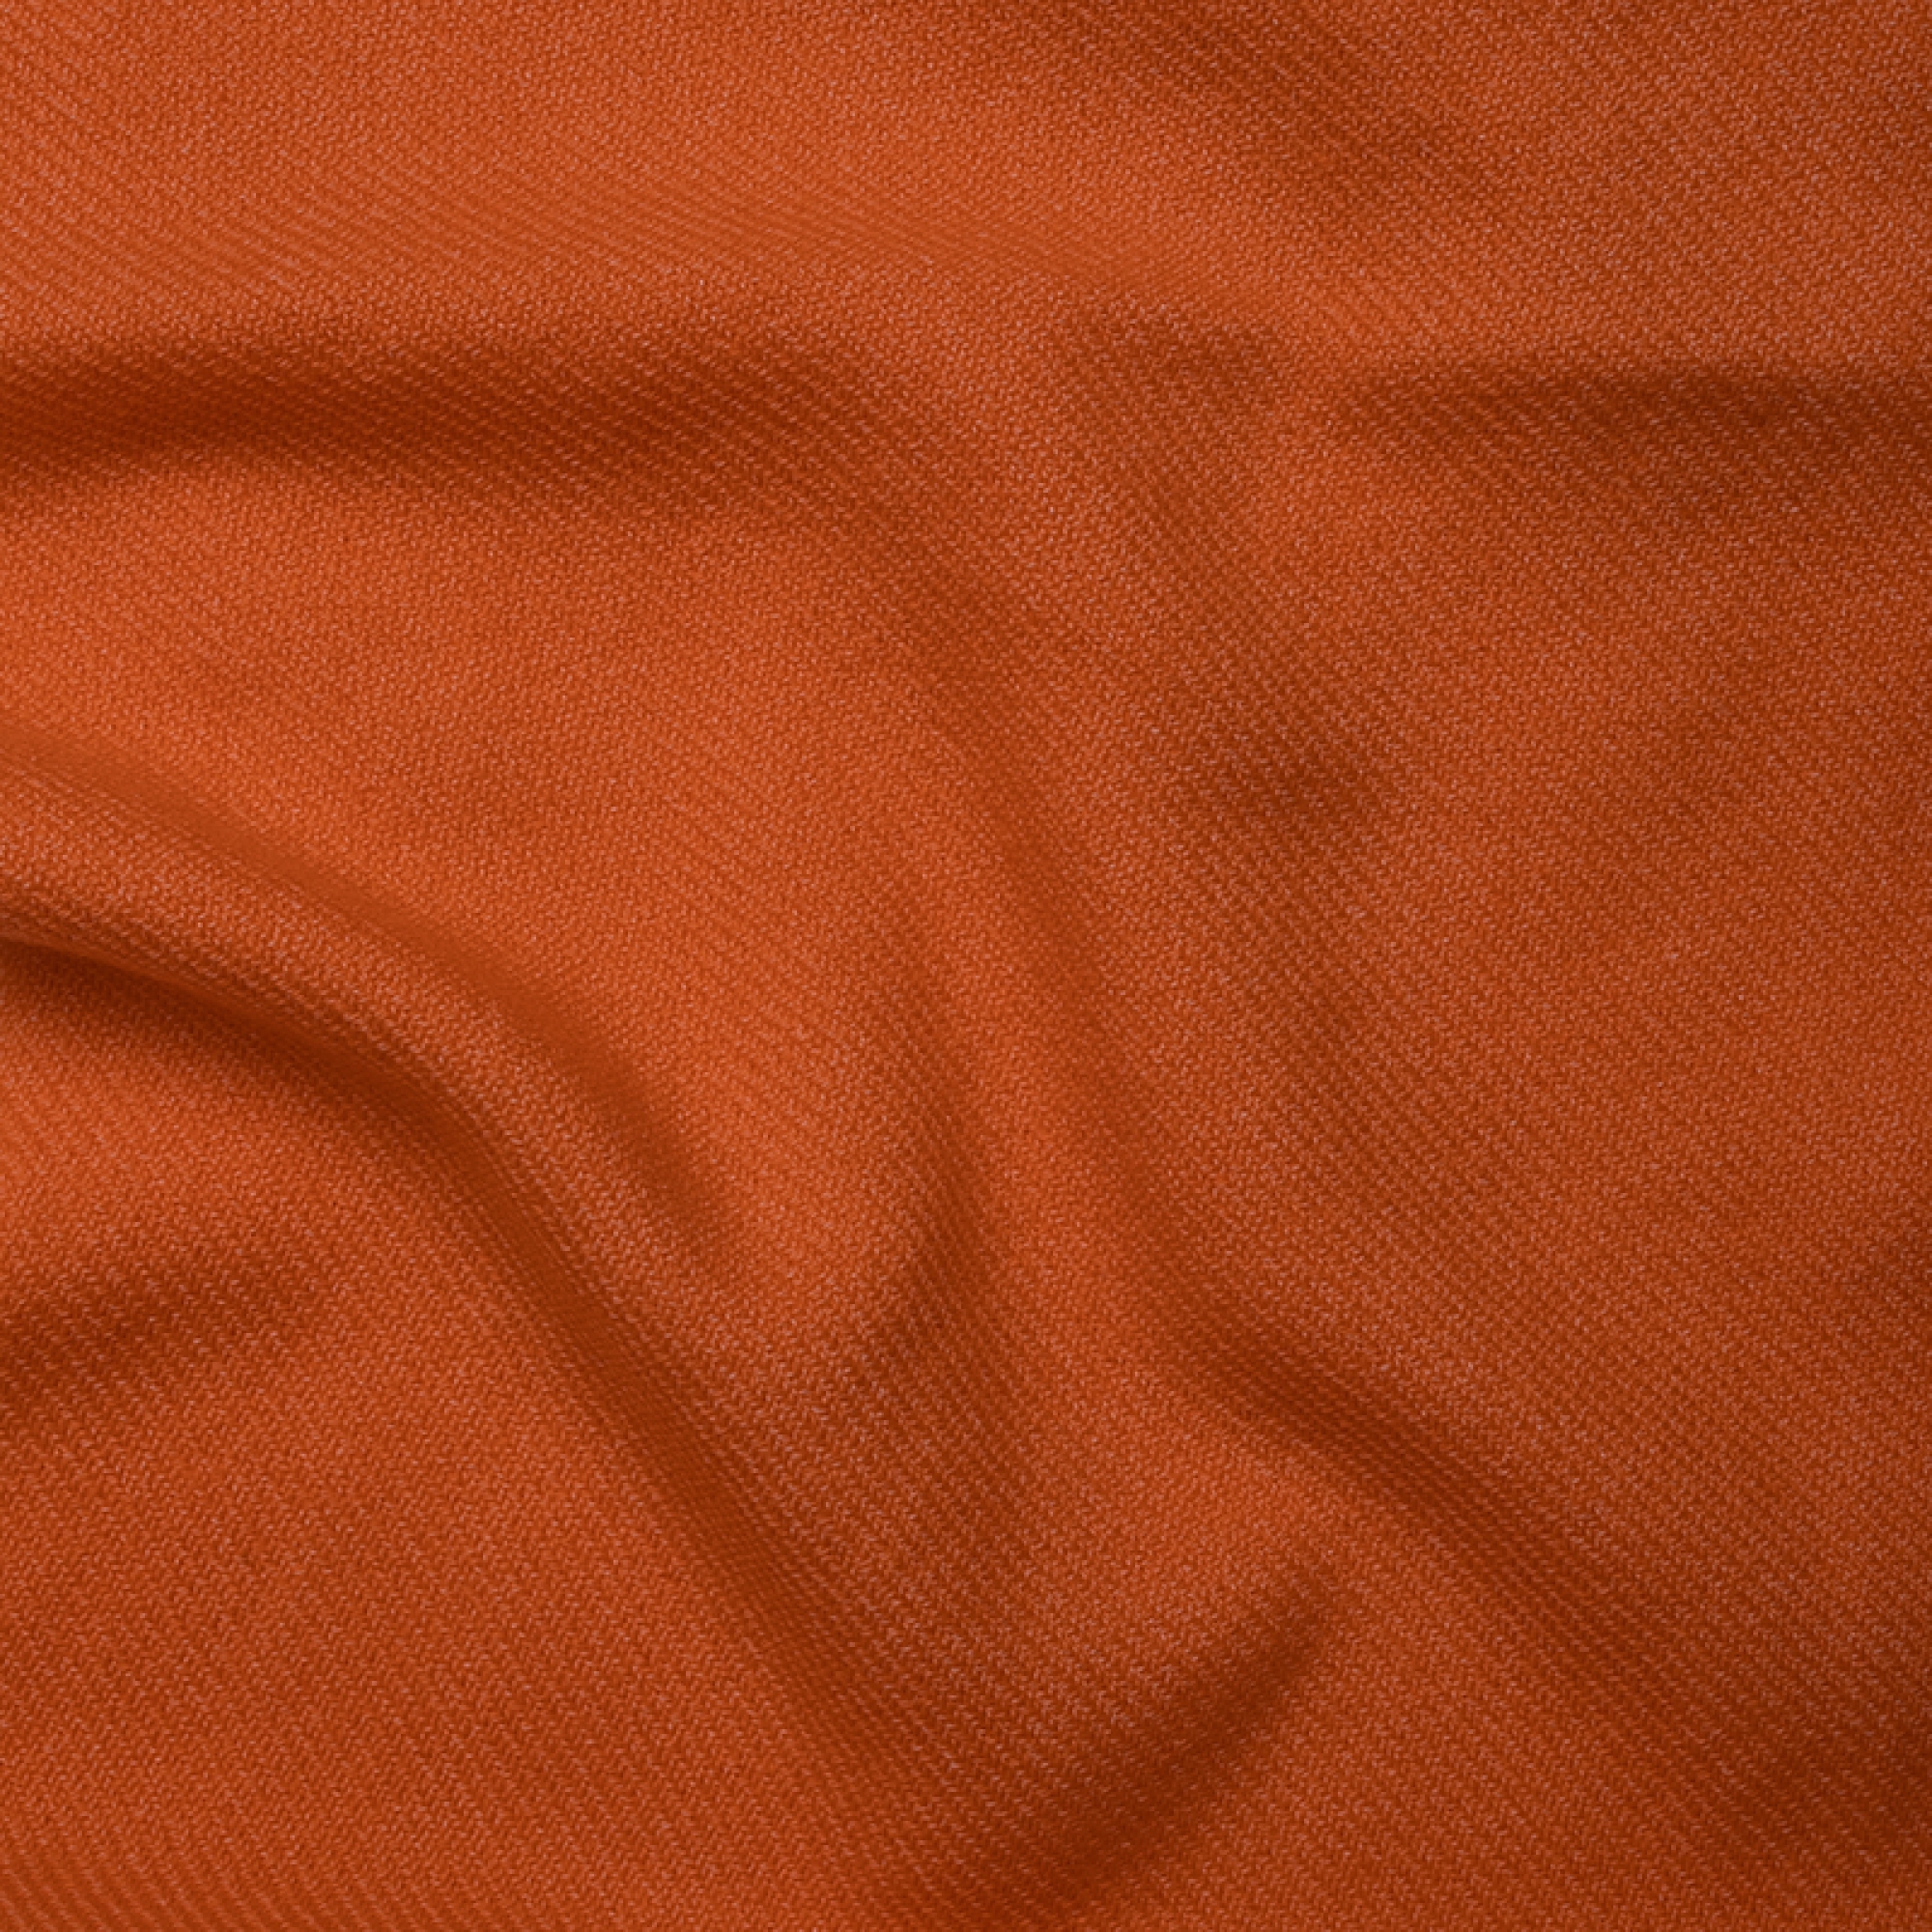 Cashmere accessories blanket toodoo plain l 220 x 220 orange popsicle 220x220cm